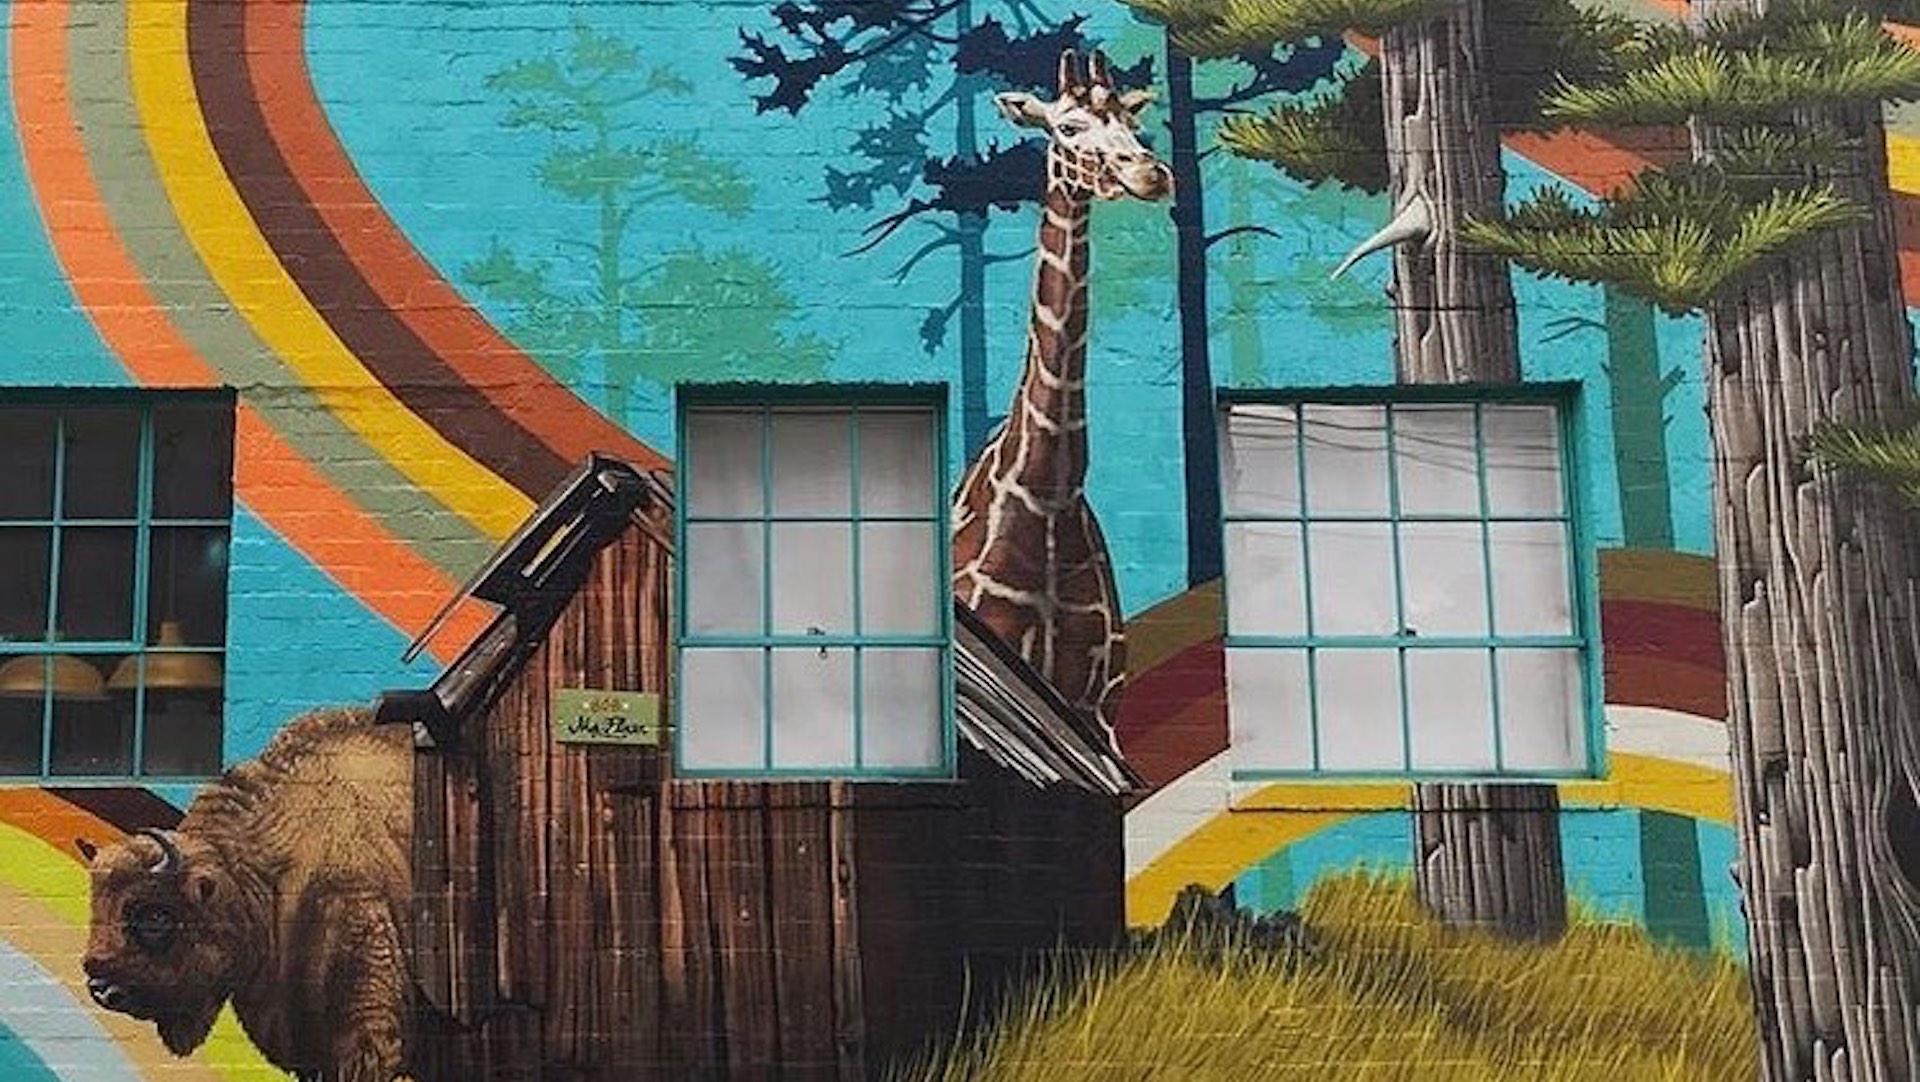 Mural featuring a buffalo and a giraffe against a blue background